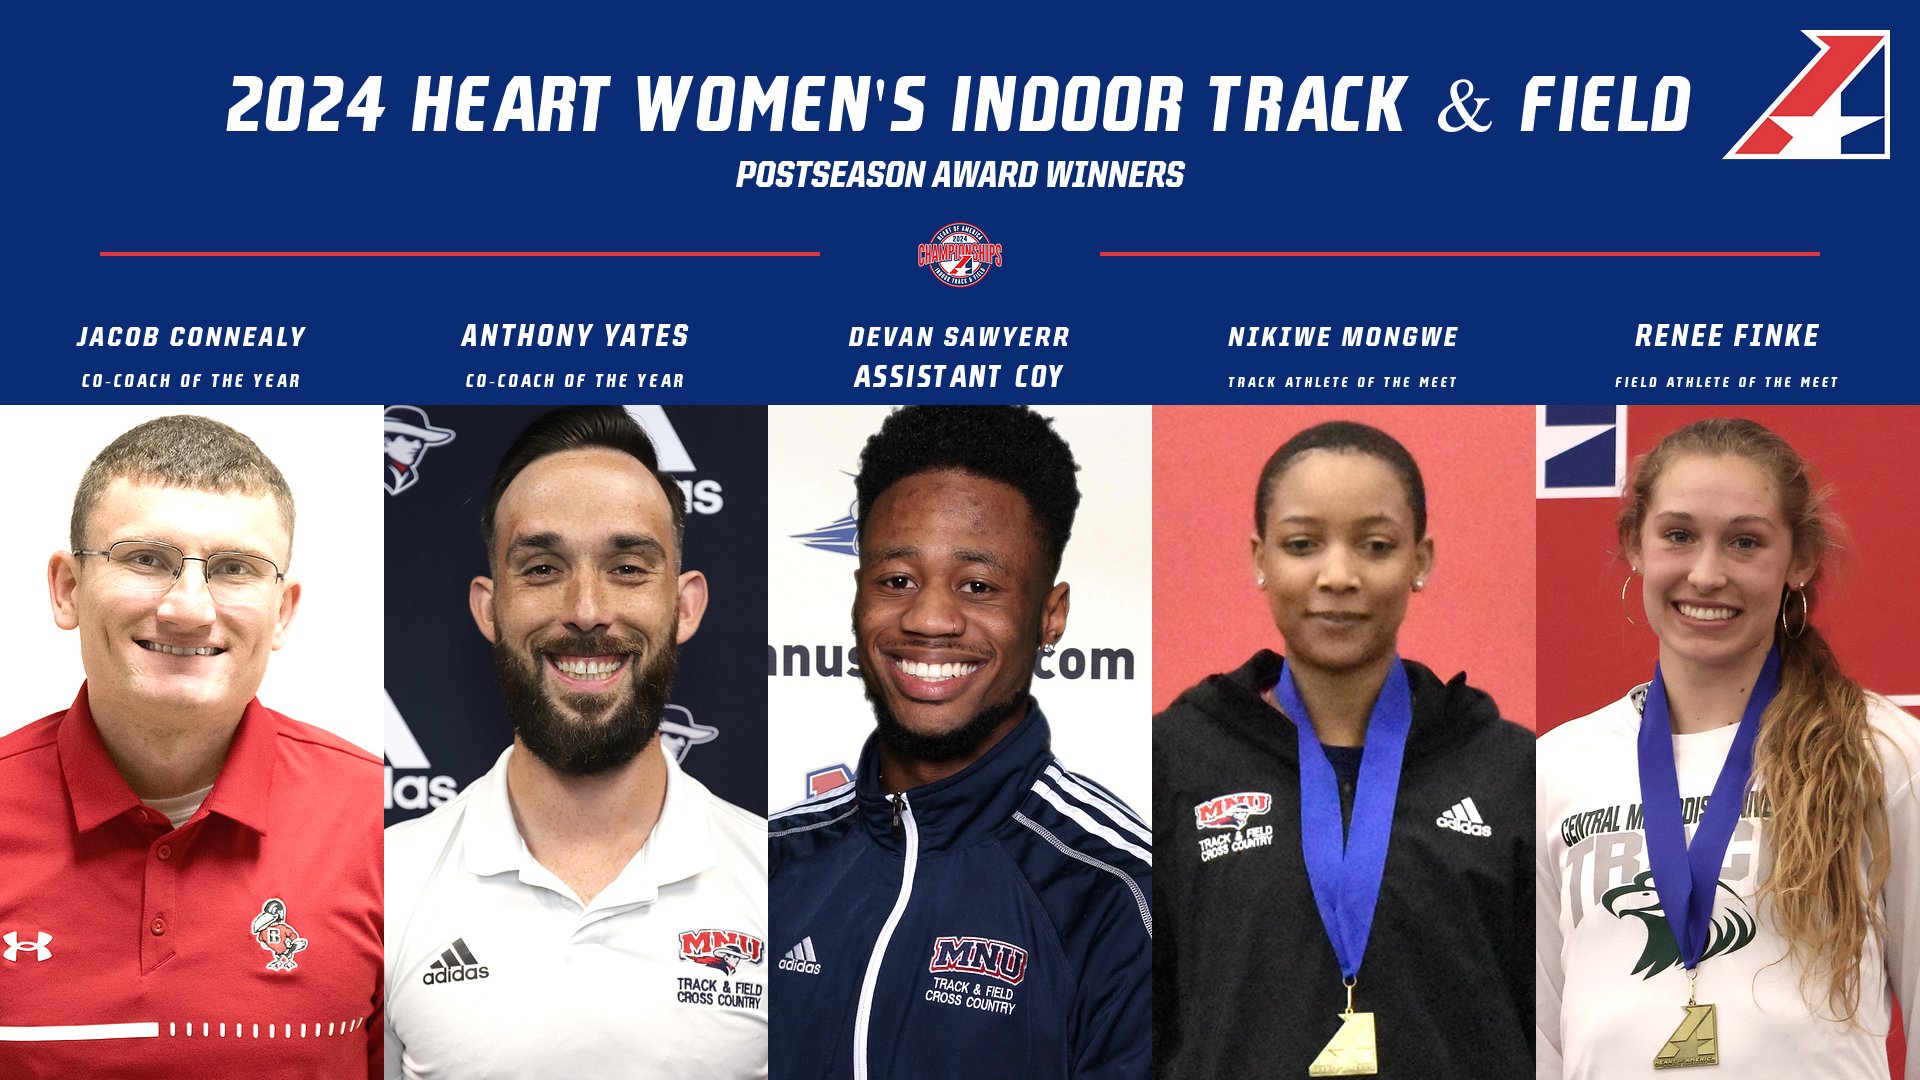 2024 Heart Women's Indoor Track & Field Postseason Award Winners Announced